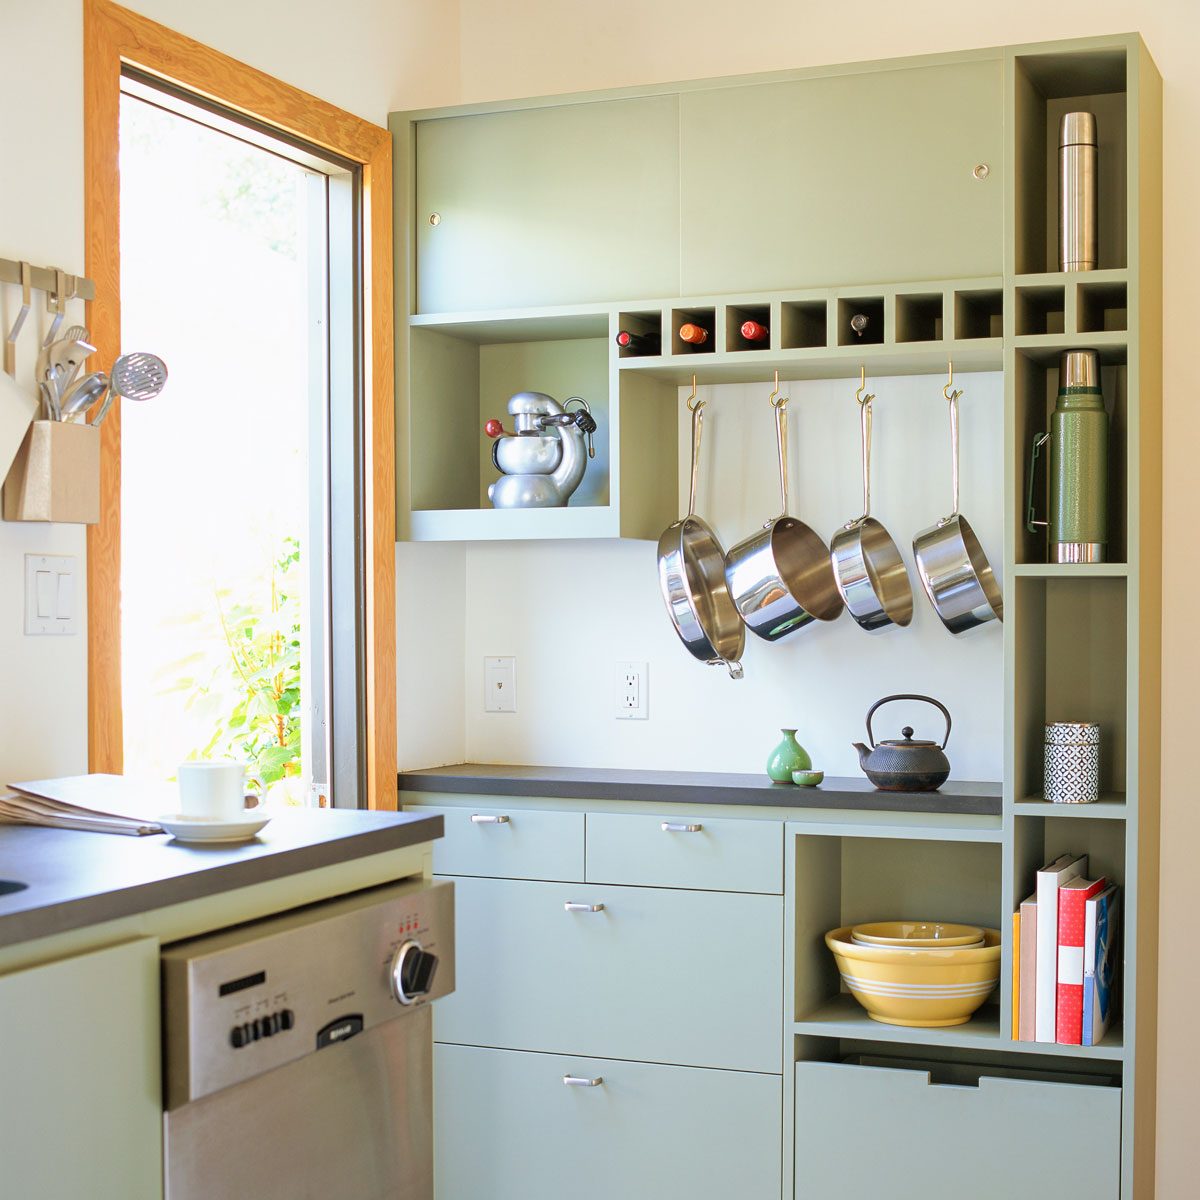 14 Kitchen Wall Storage Ideas to Reorganize Your Space